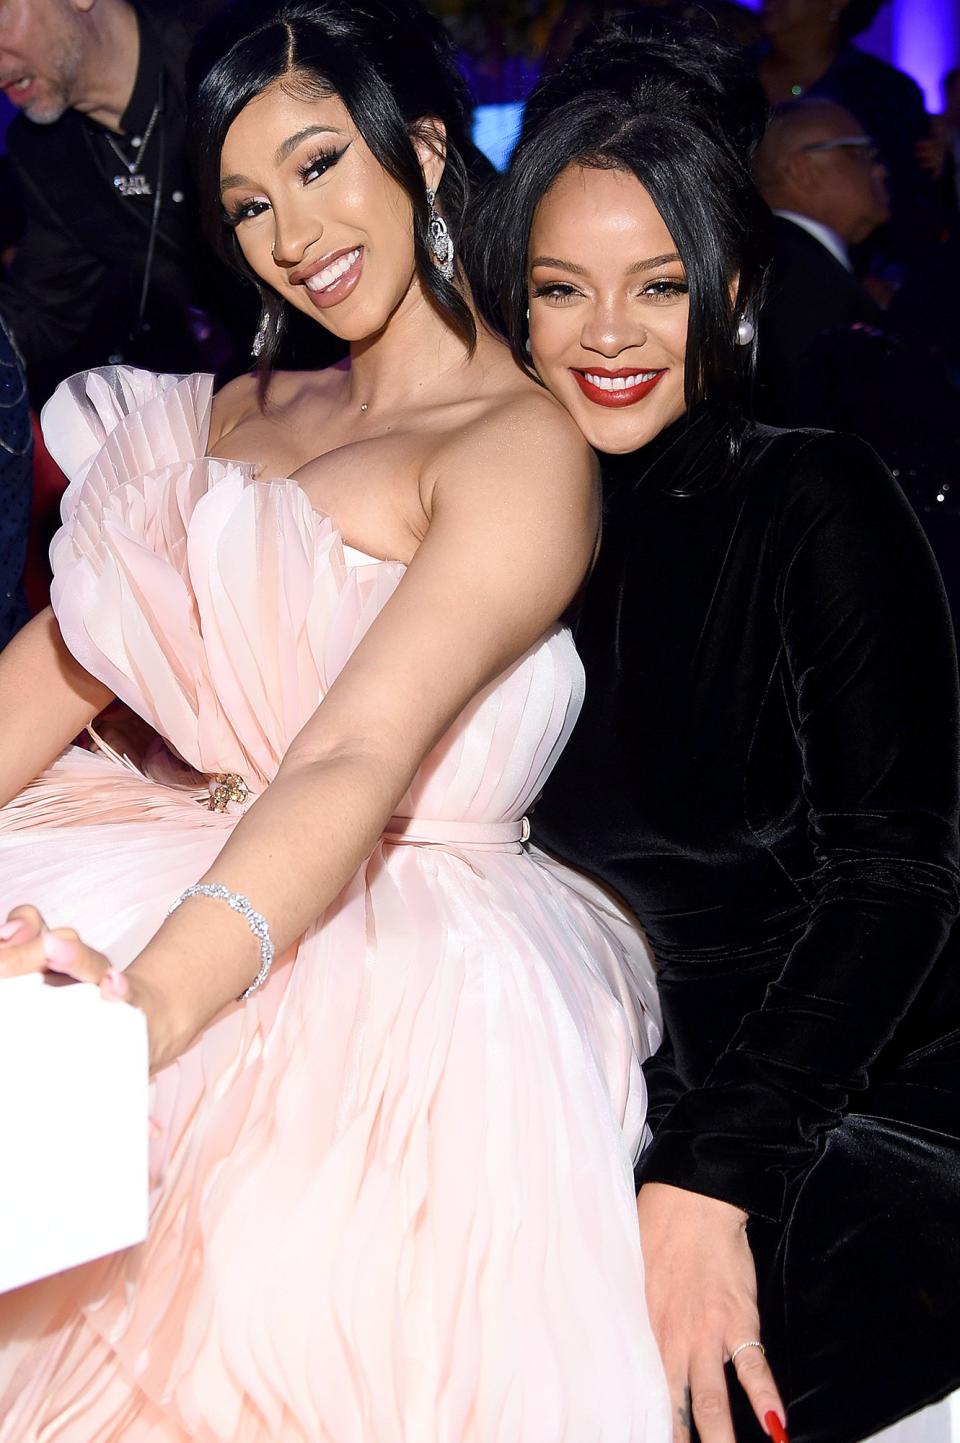 Cardi B and Rihanna smiled together at Rihanna's Annual Diamond Ball in New York City.